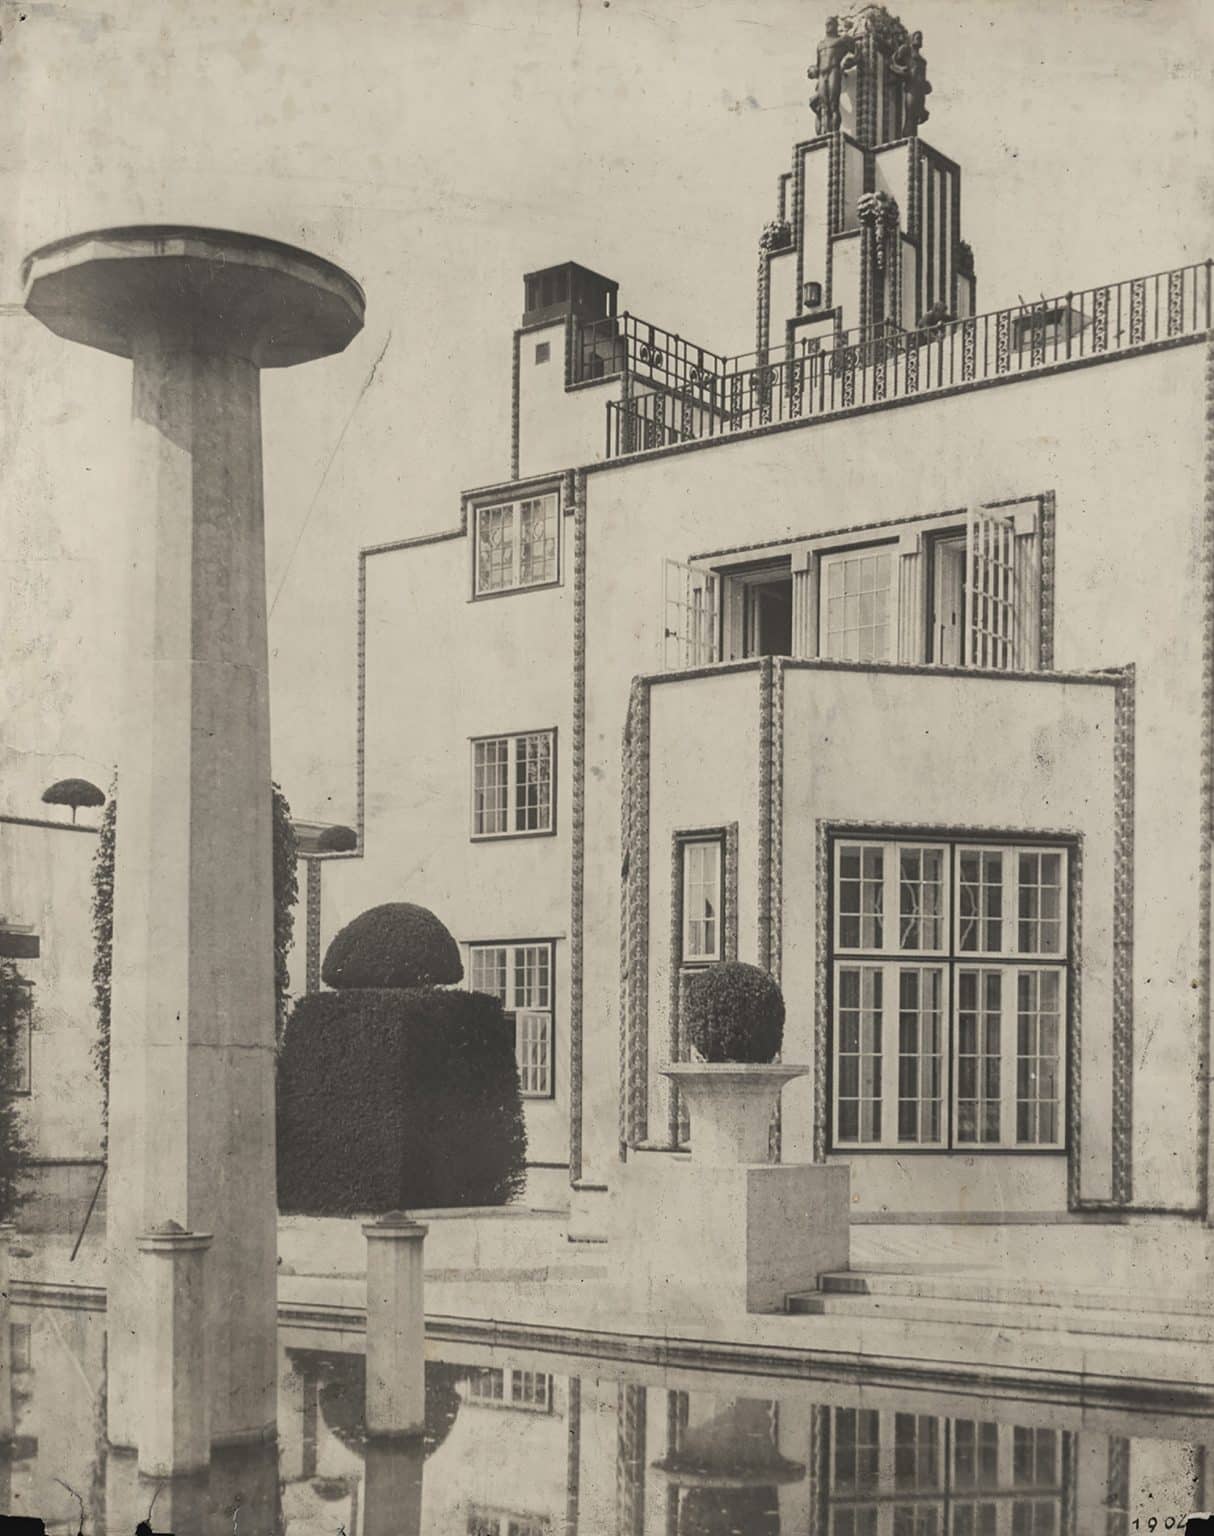 Josef Hoffmann and the Geometric Art Nouveau, part 1 